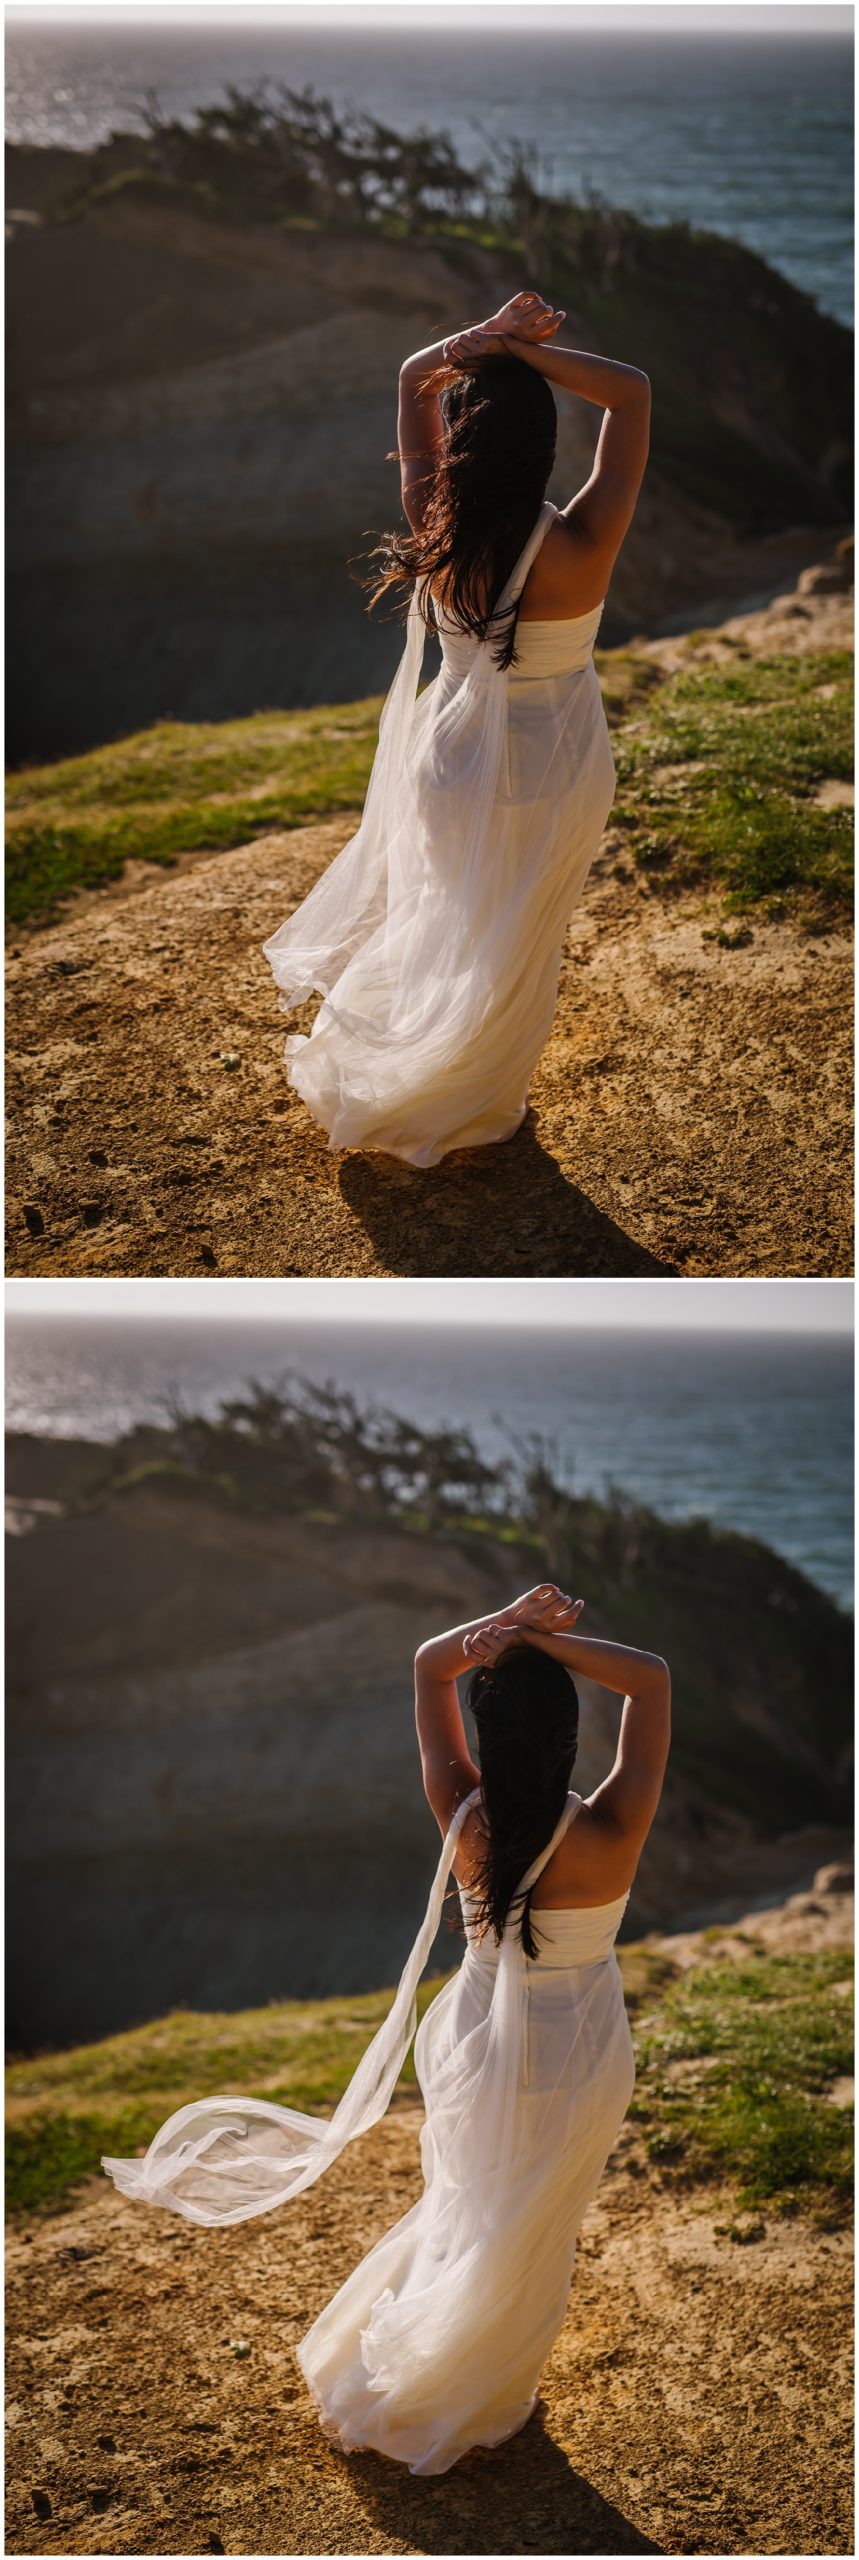 Cape-kiwanda-bridal-portrait-destination-wedding-photographer_0020.jpg